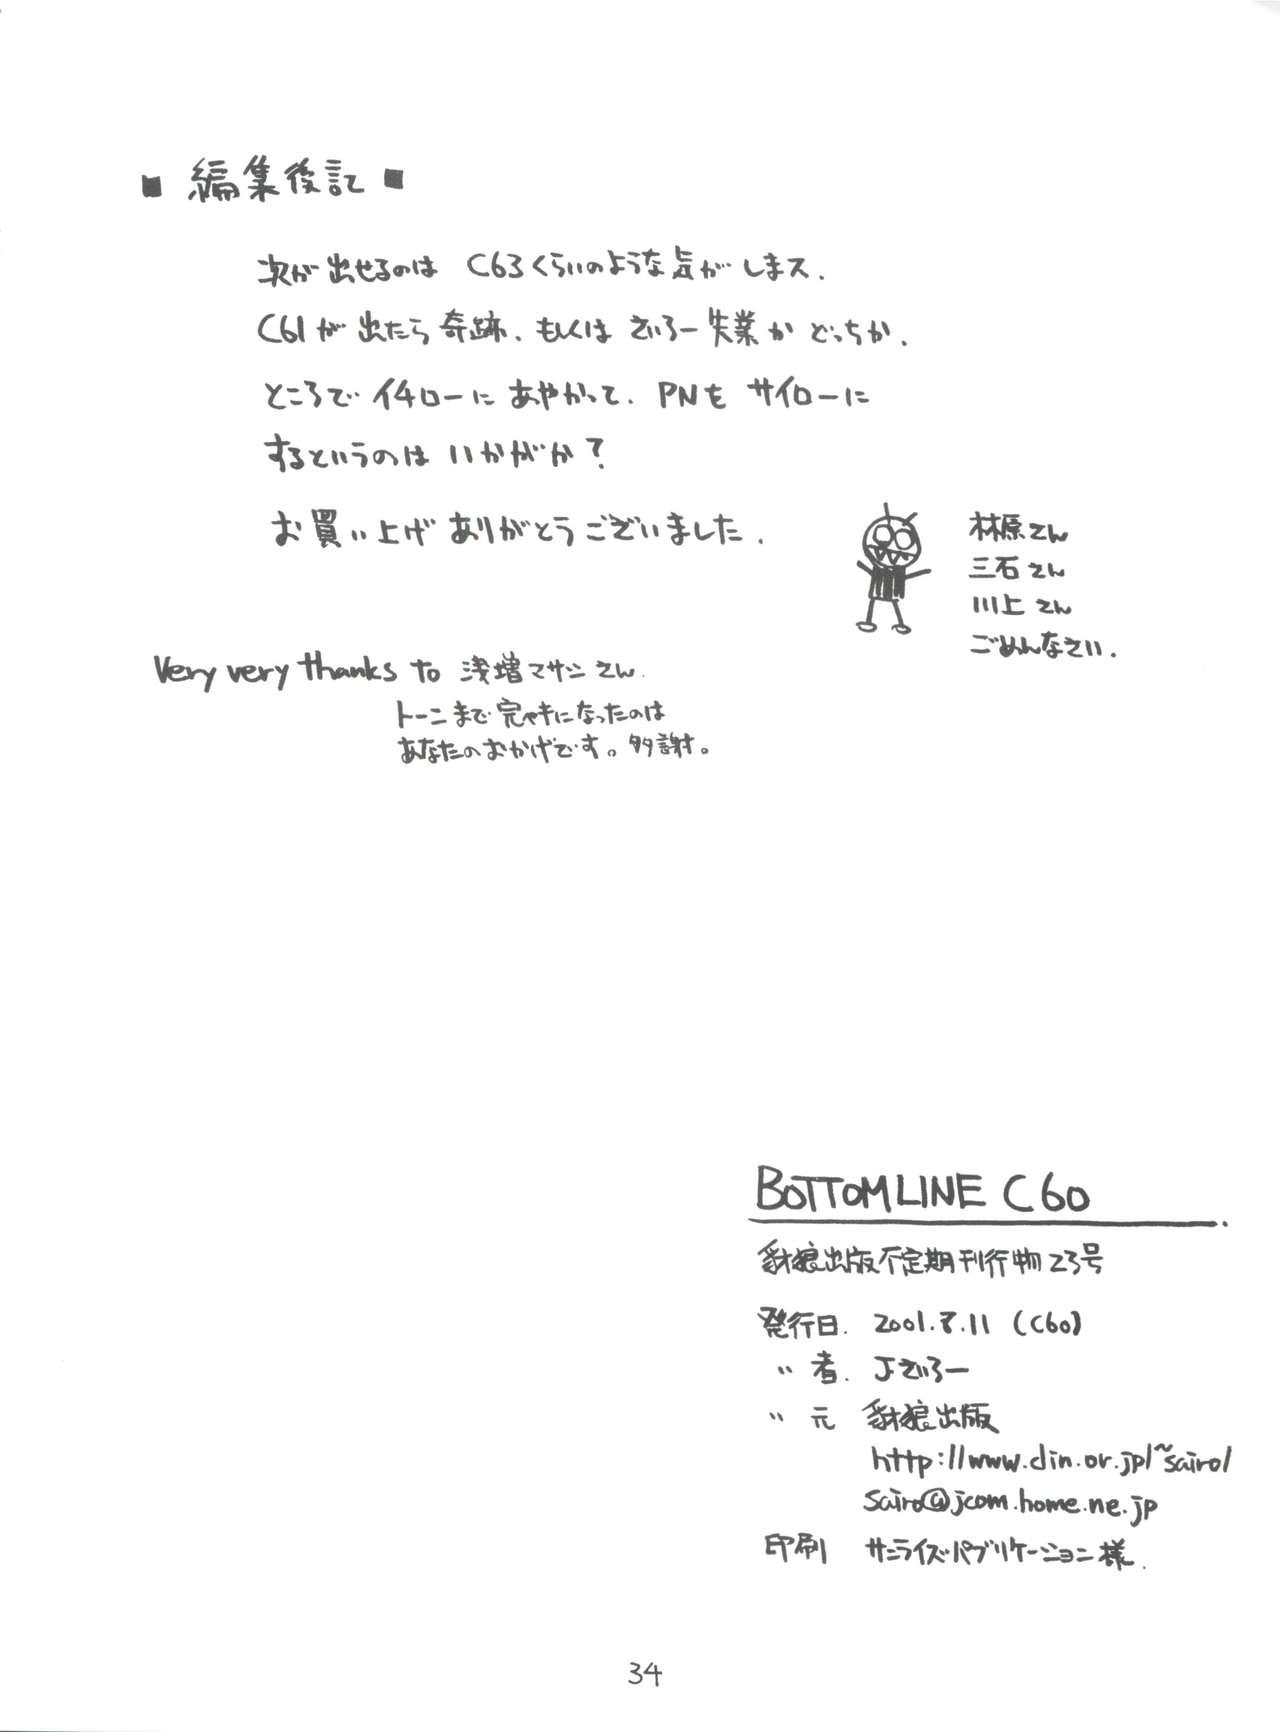 Sentando Bottomline C60 - Slayers Gakkou no kaidan Onlyfans - Page 33